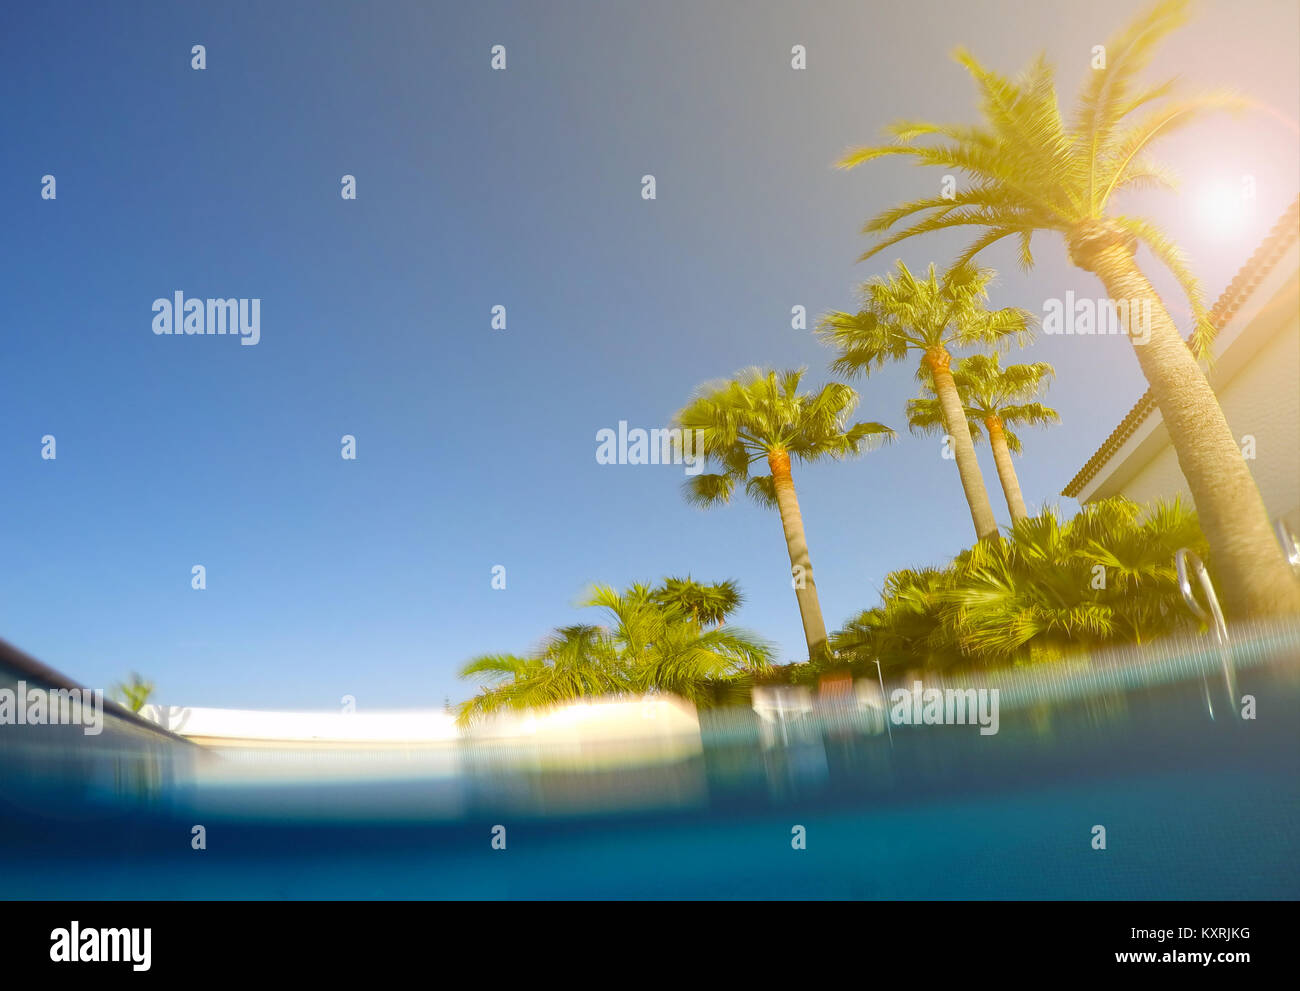 Swimmingpool, Palmen und sonnigen blauen Himmel Stockfoto